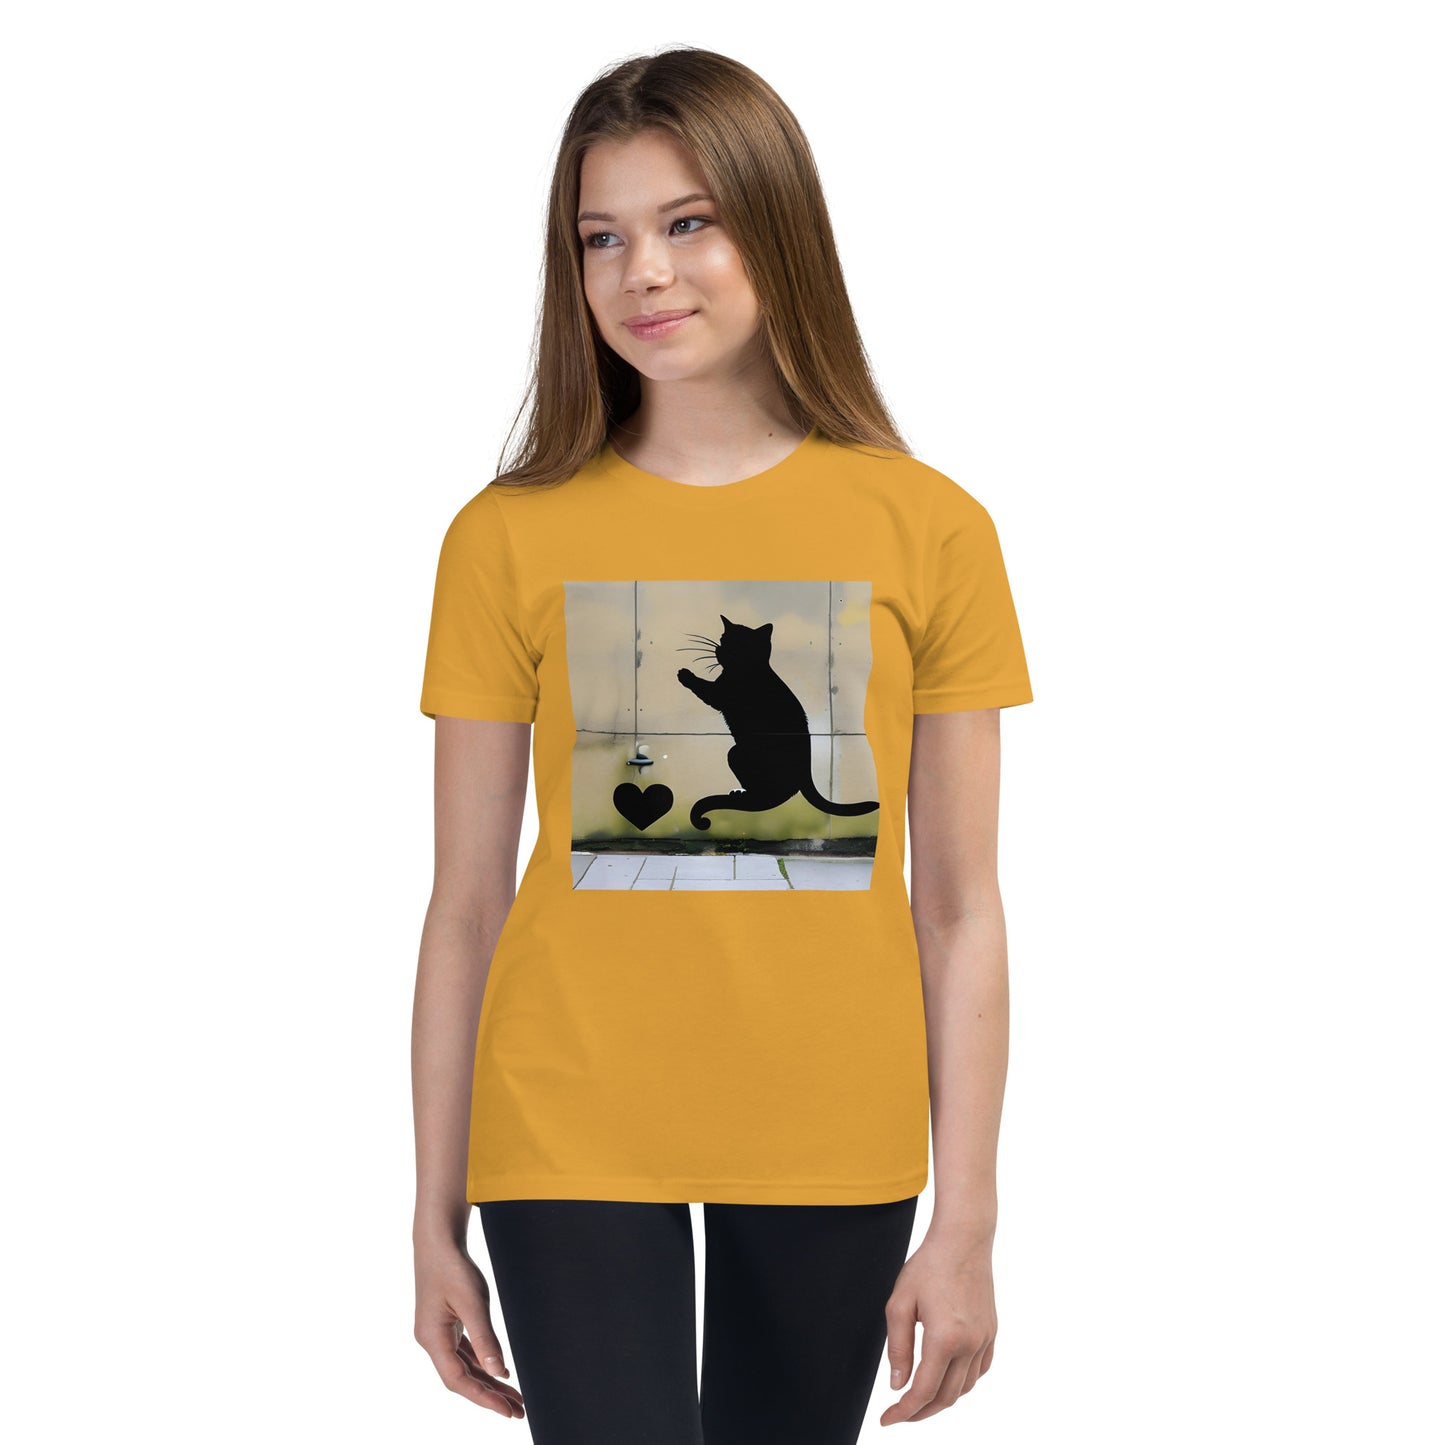 Purradise Kid's T-Shirt - 050